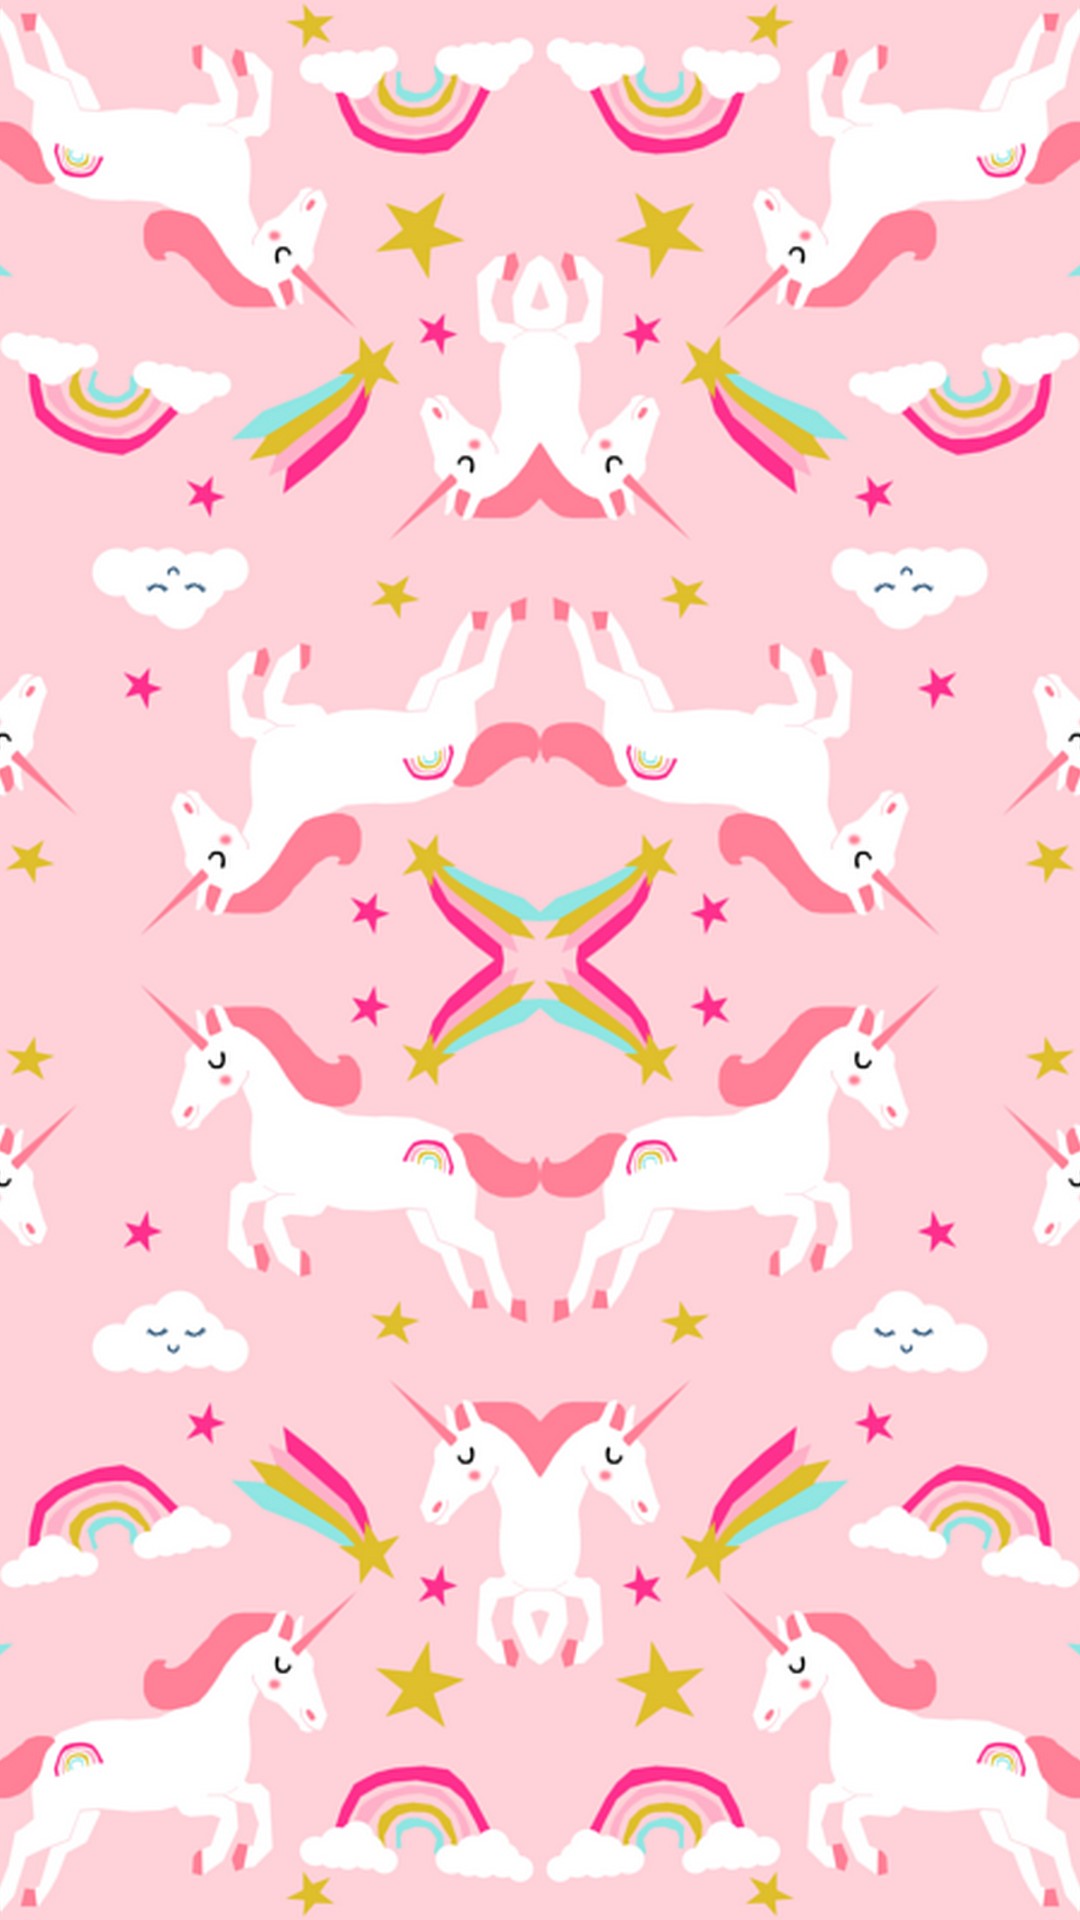 Cute Unicorn Wallpaper for Phones